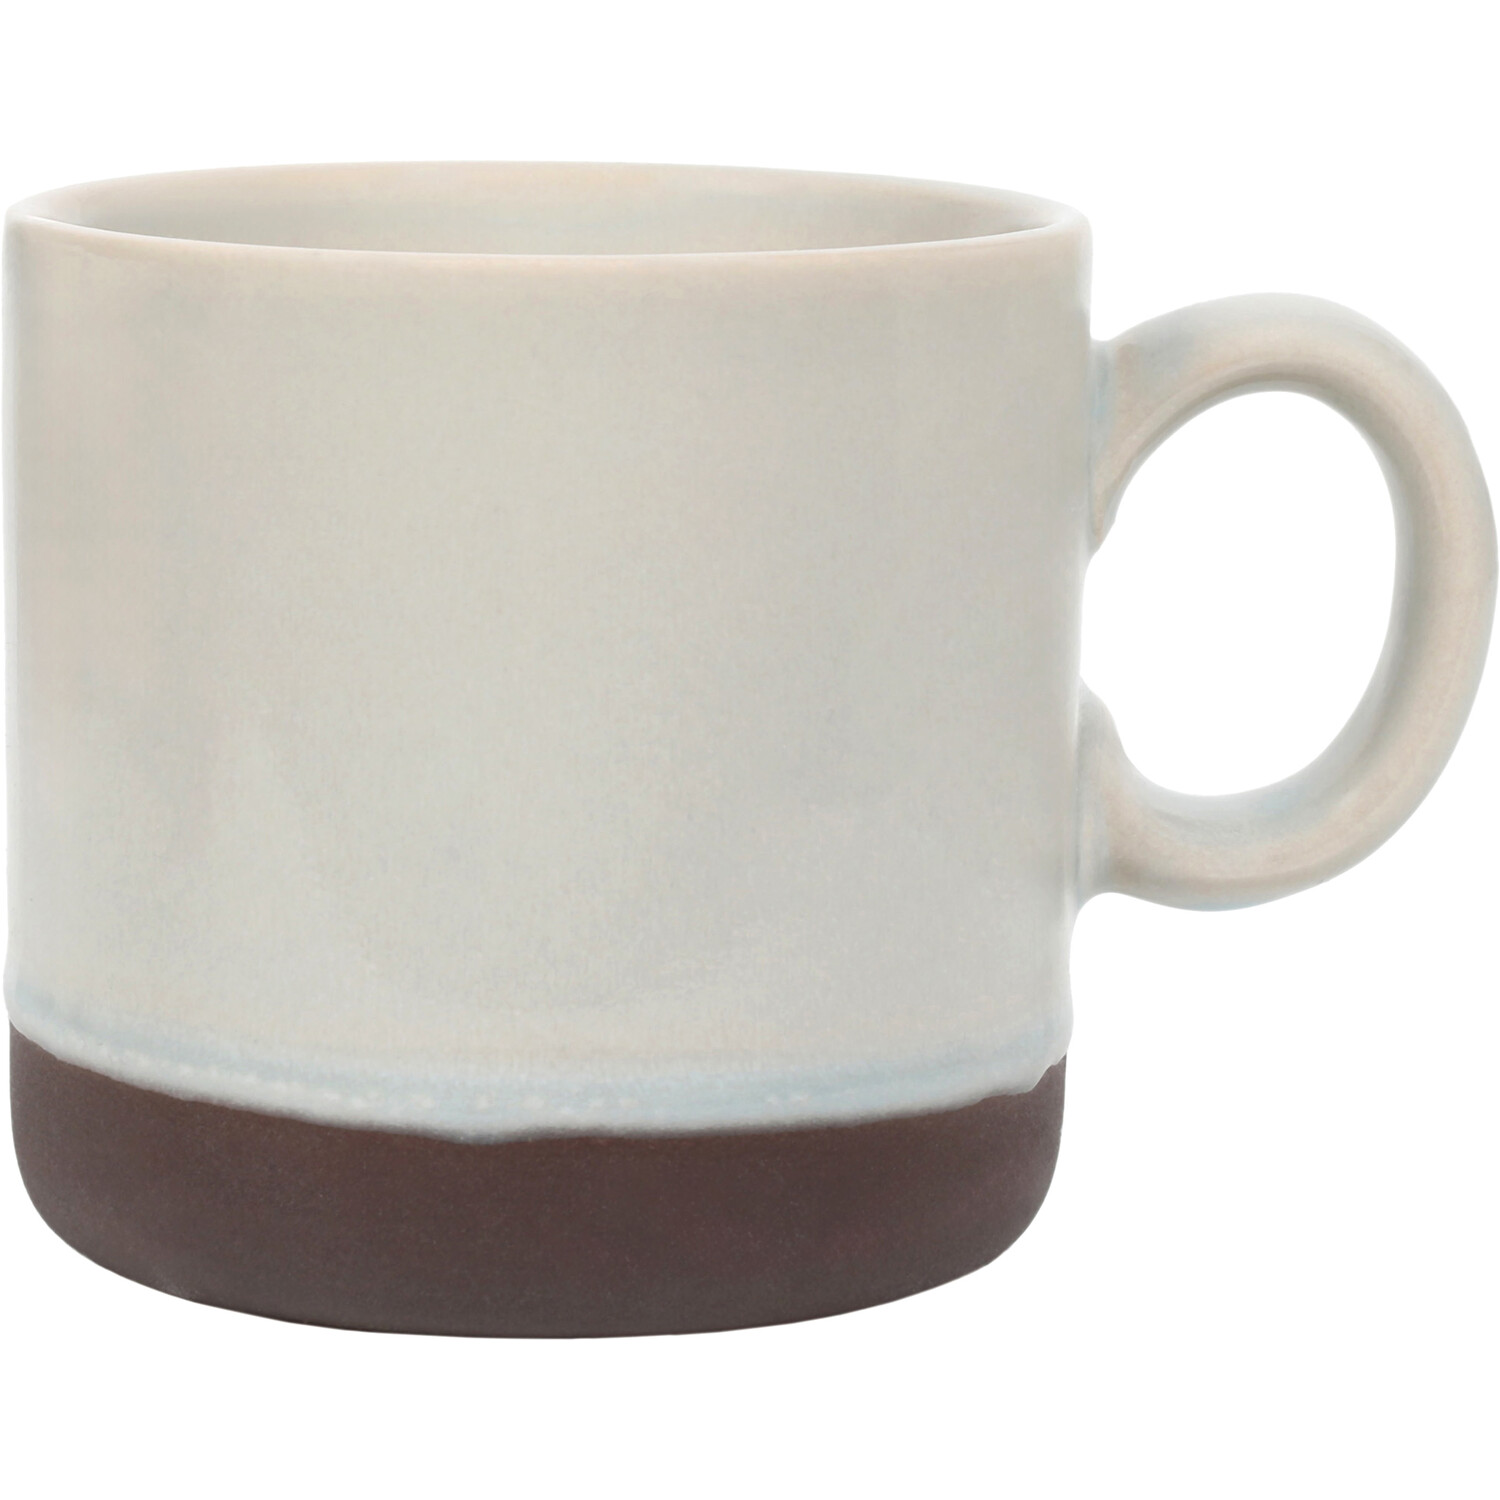 Single Reactive Glaze Mug in Assorted styles Image 1